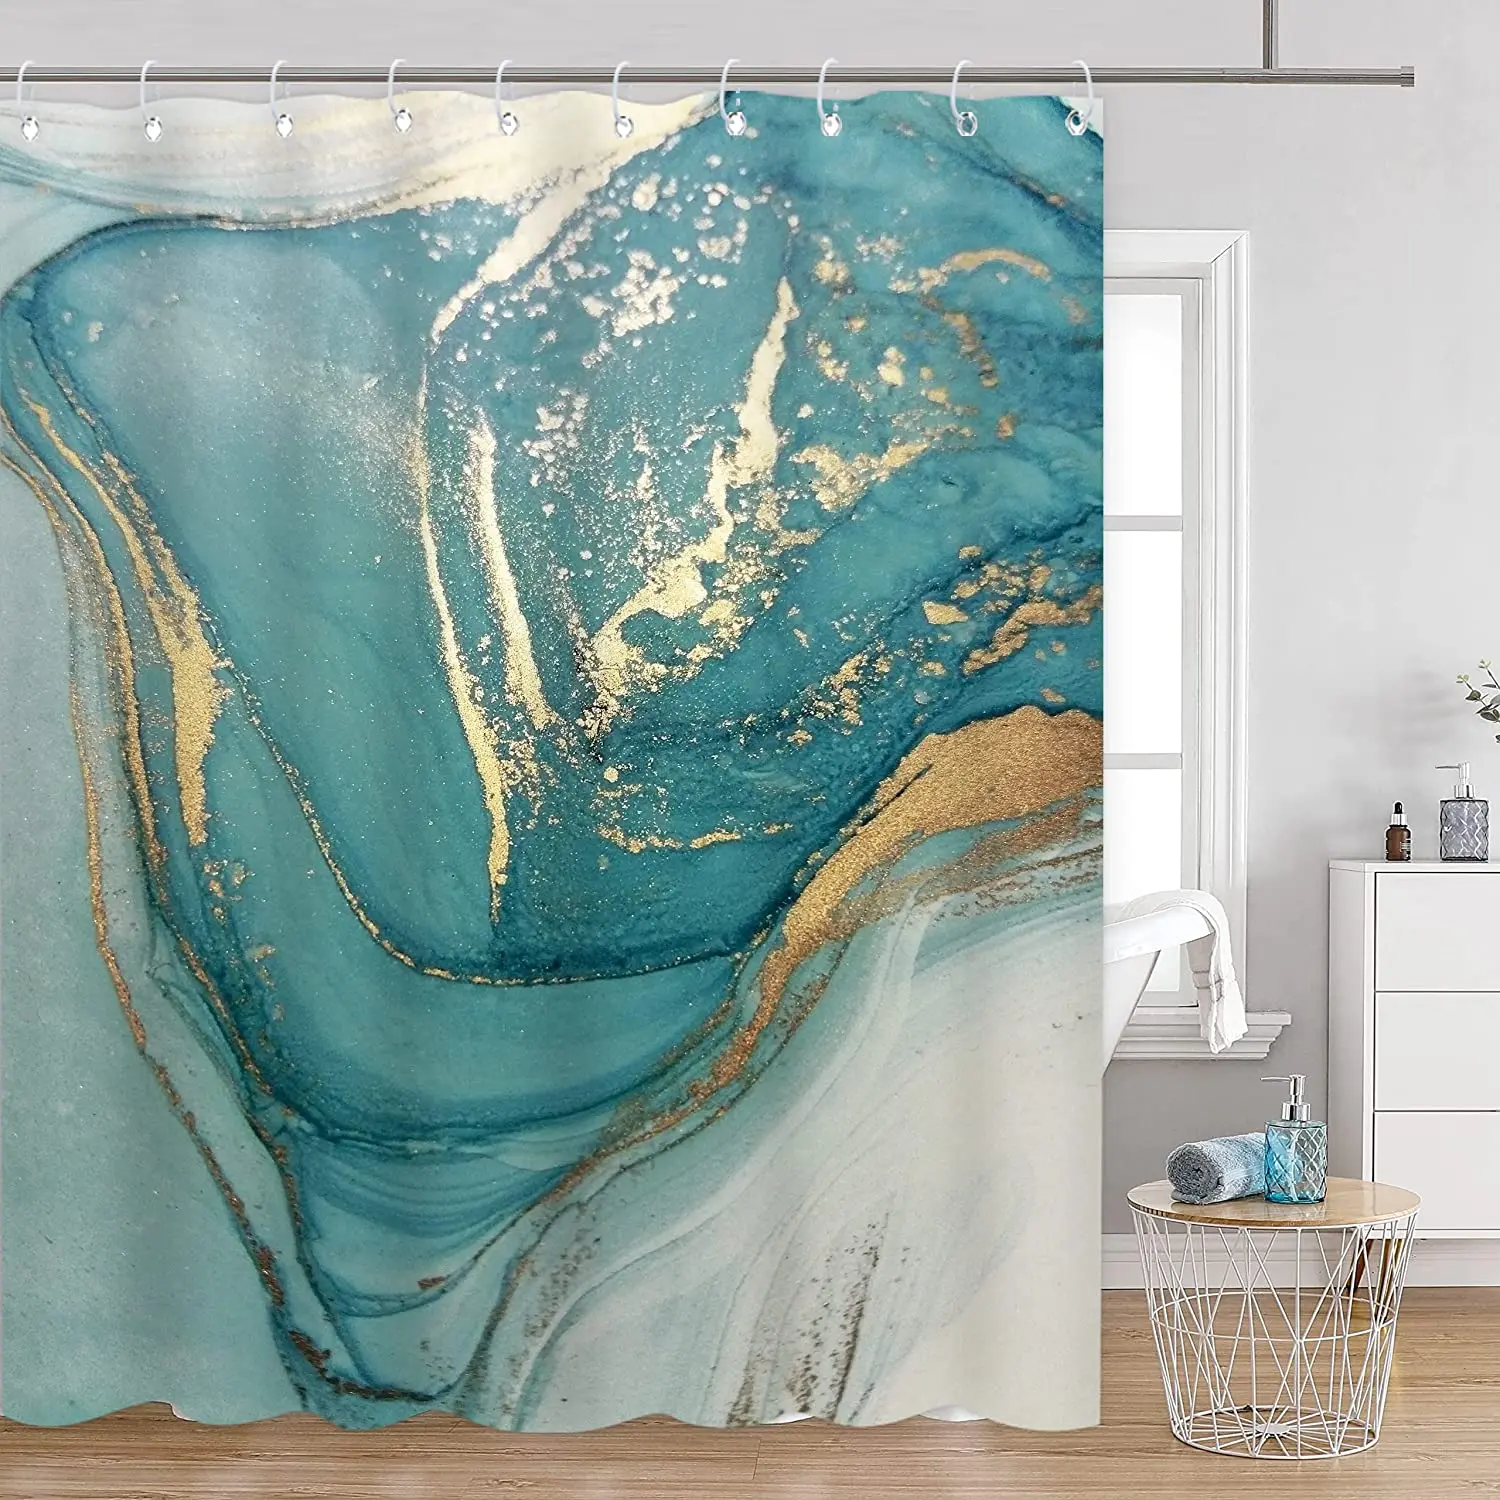 Abstract Modern Turquoise Aqua Blurry Texture Crack Luxury Bath Curtains Bathroom Decor With Hooks